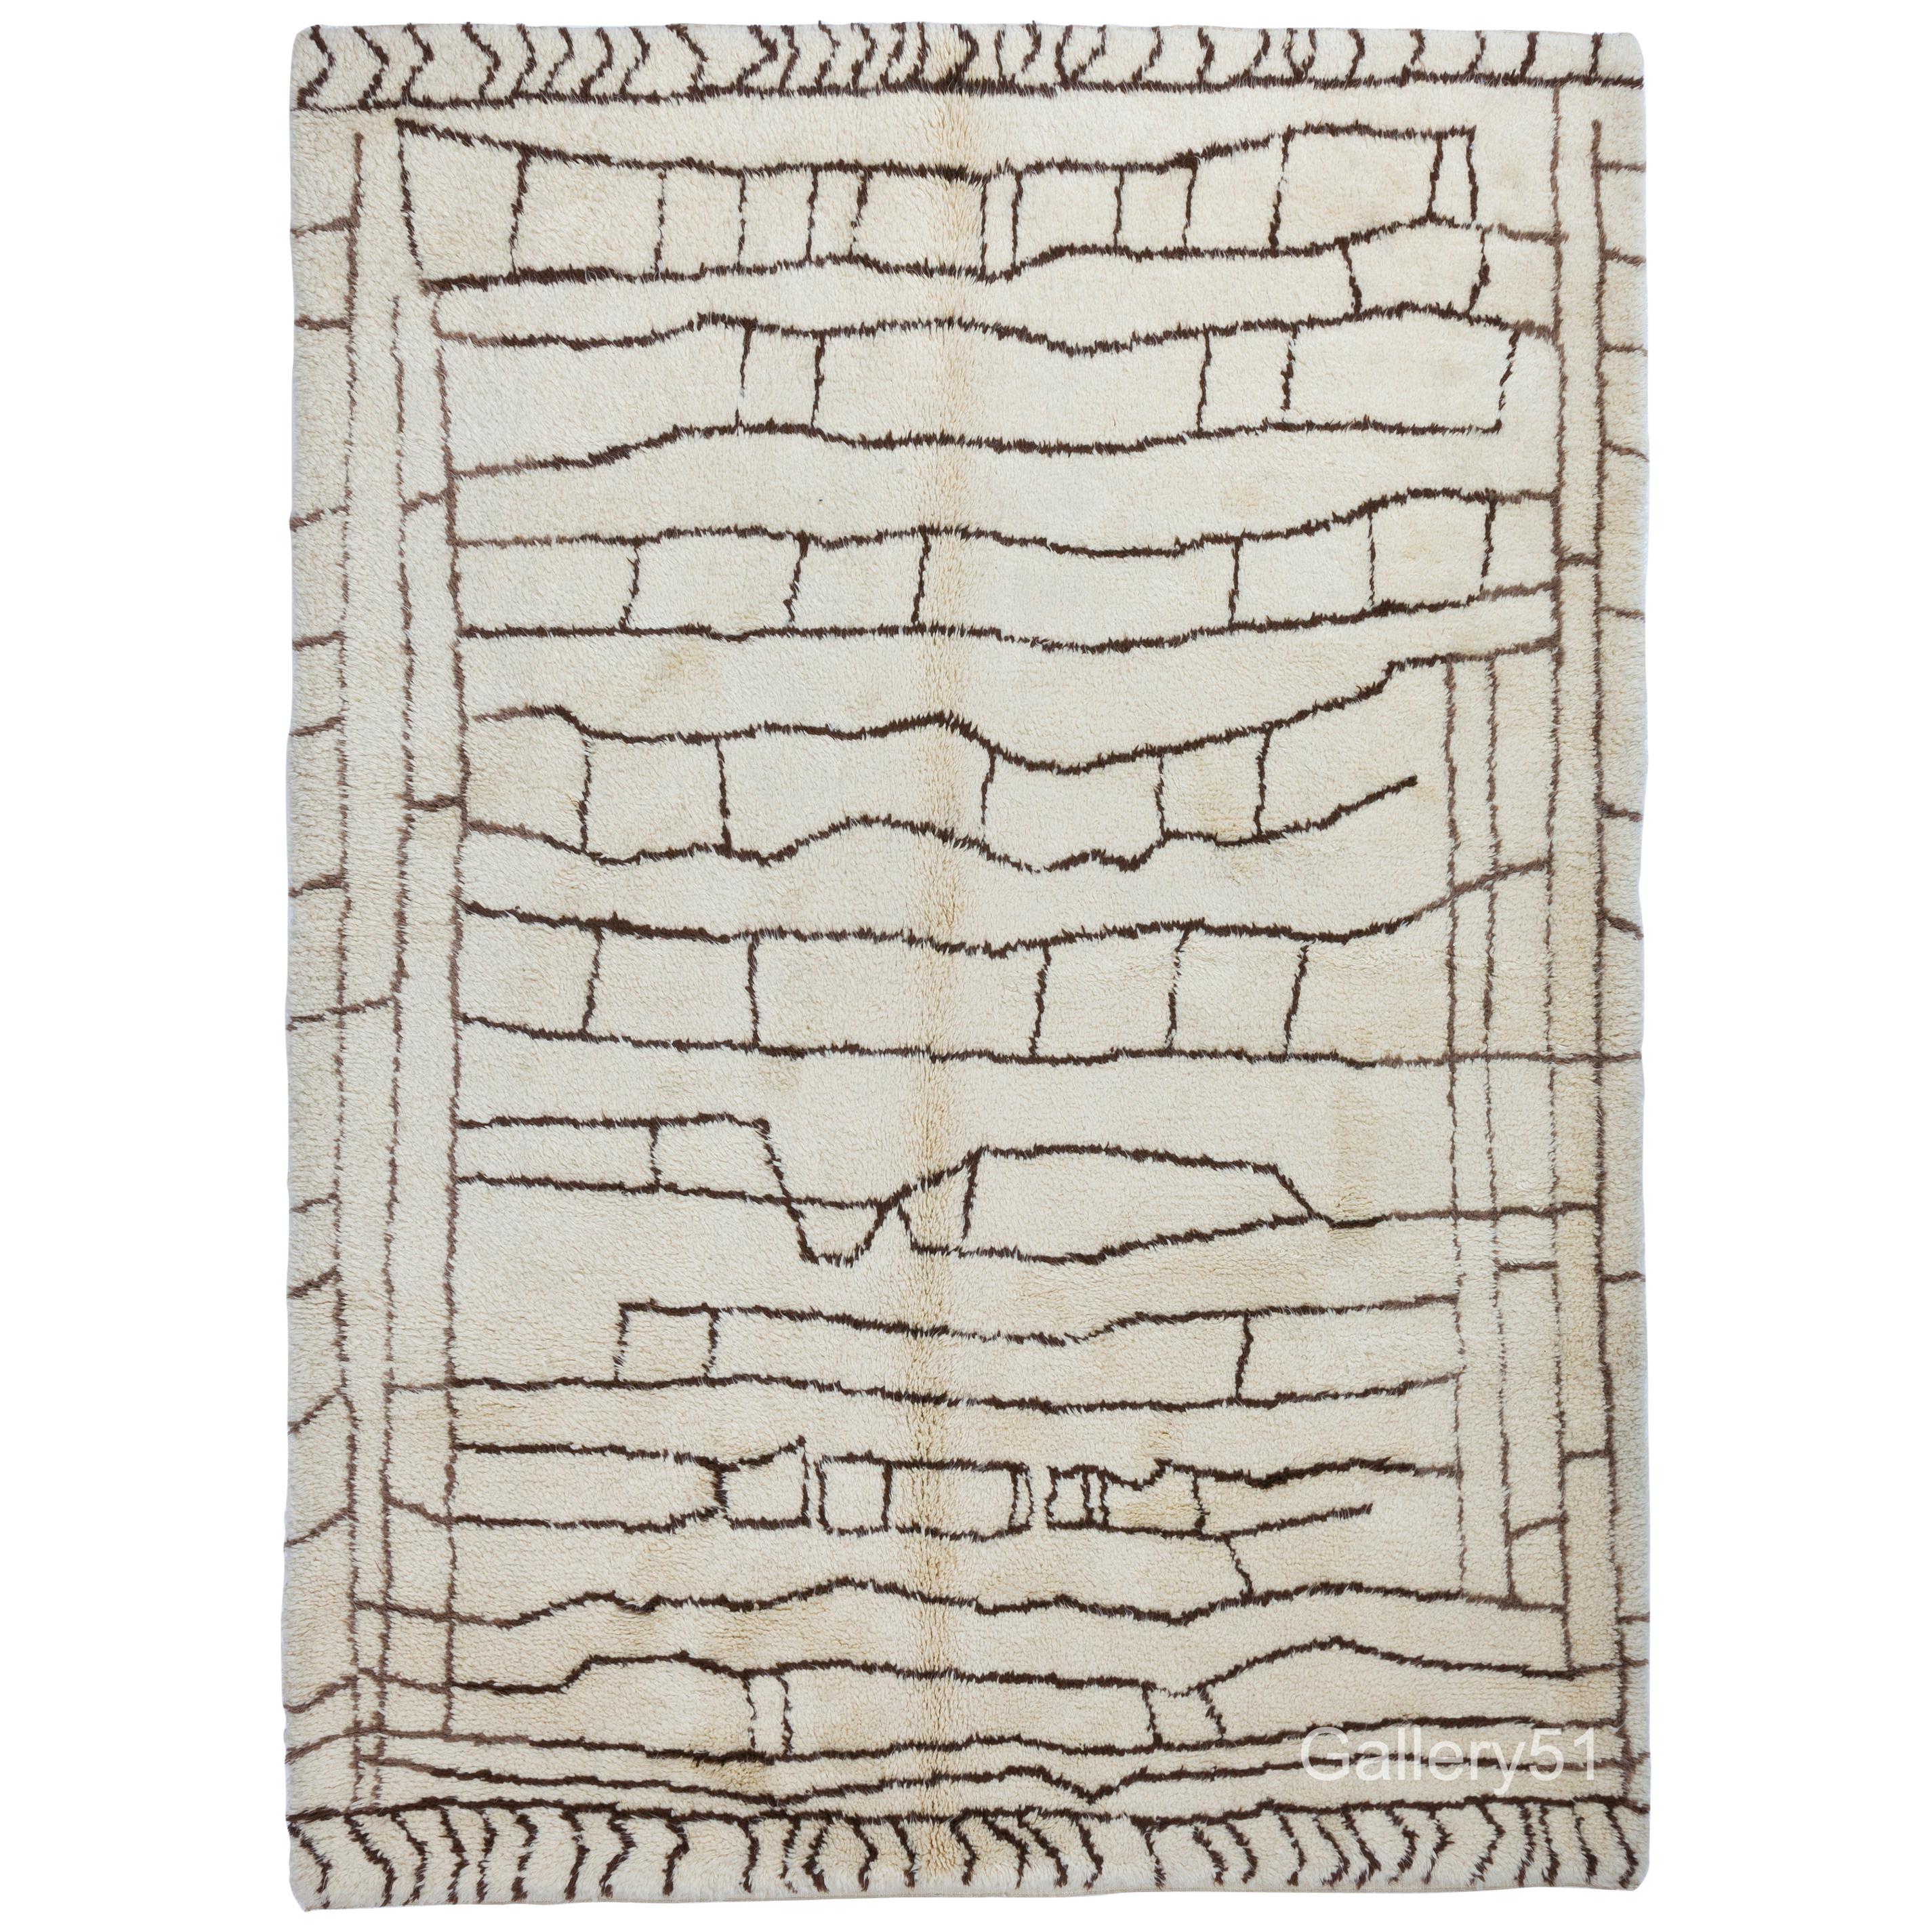 Tapis Beni Ourain marocain contemporain en laine naturelle non teintée 7,5x10 Ft